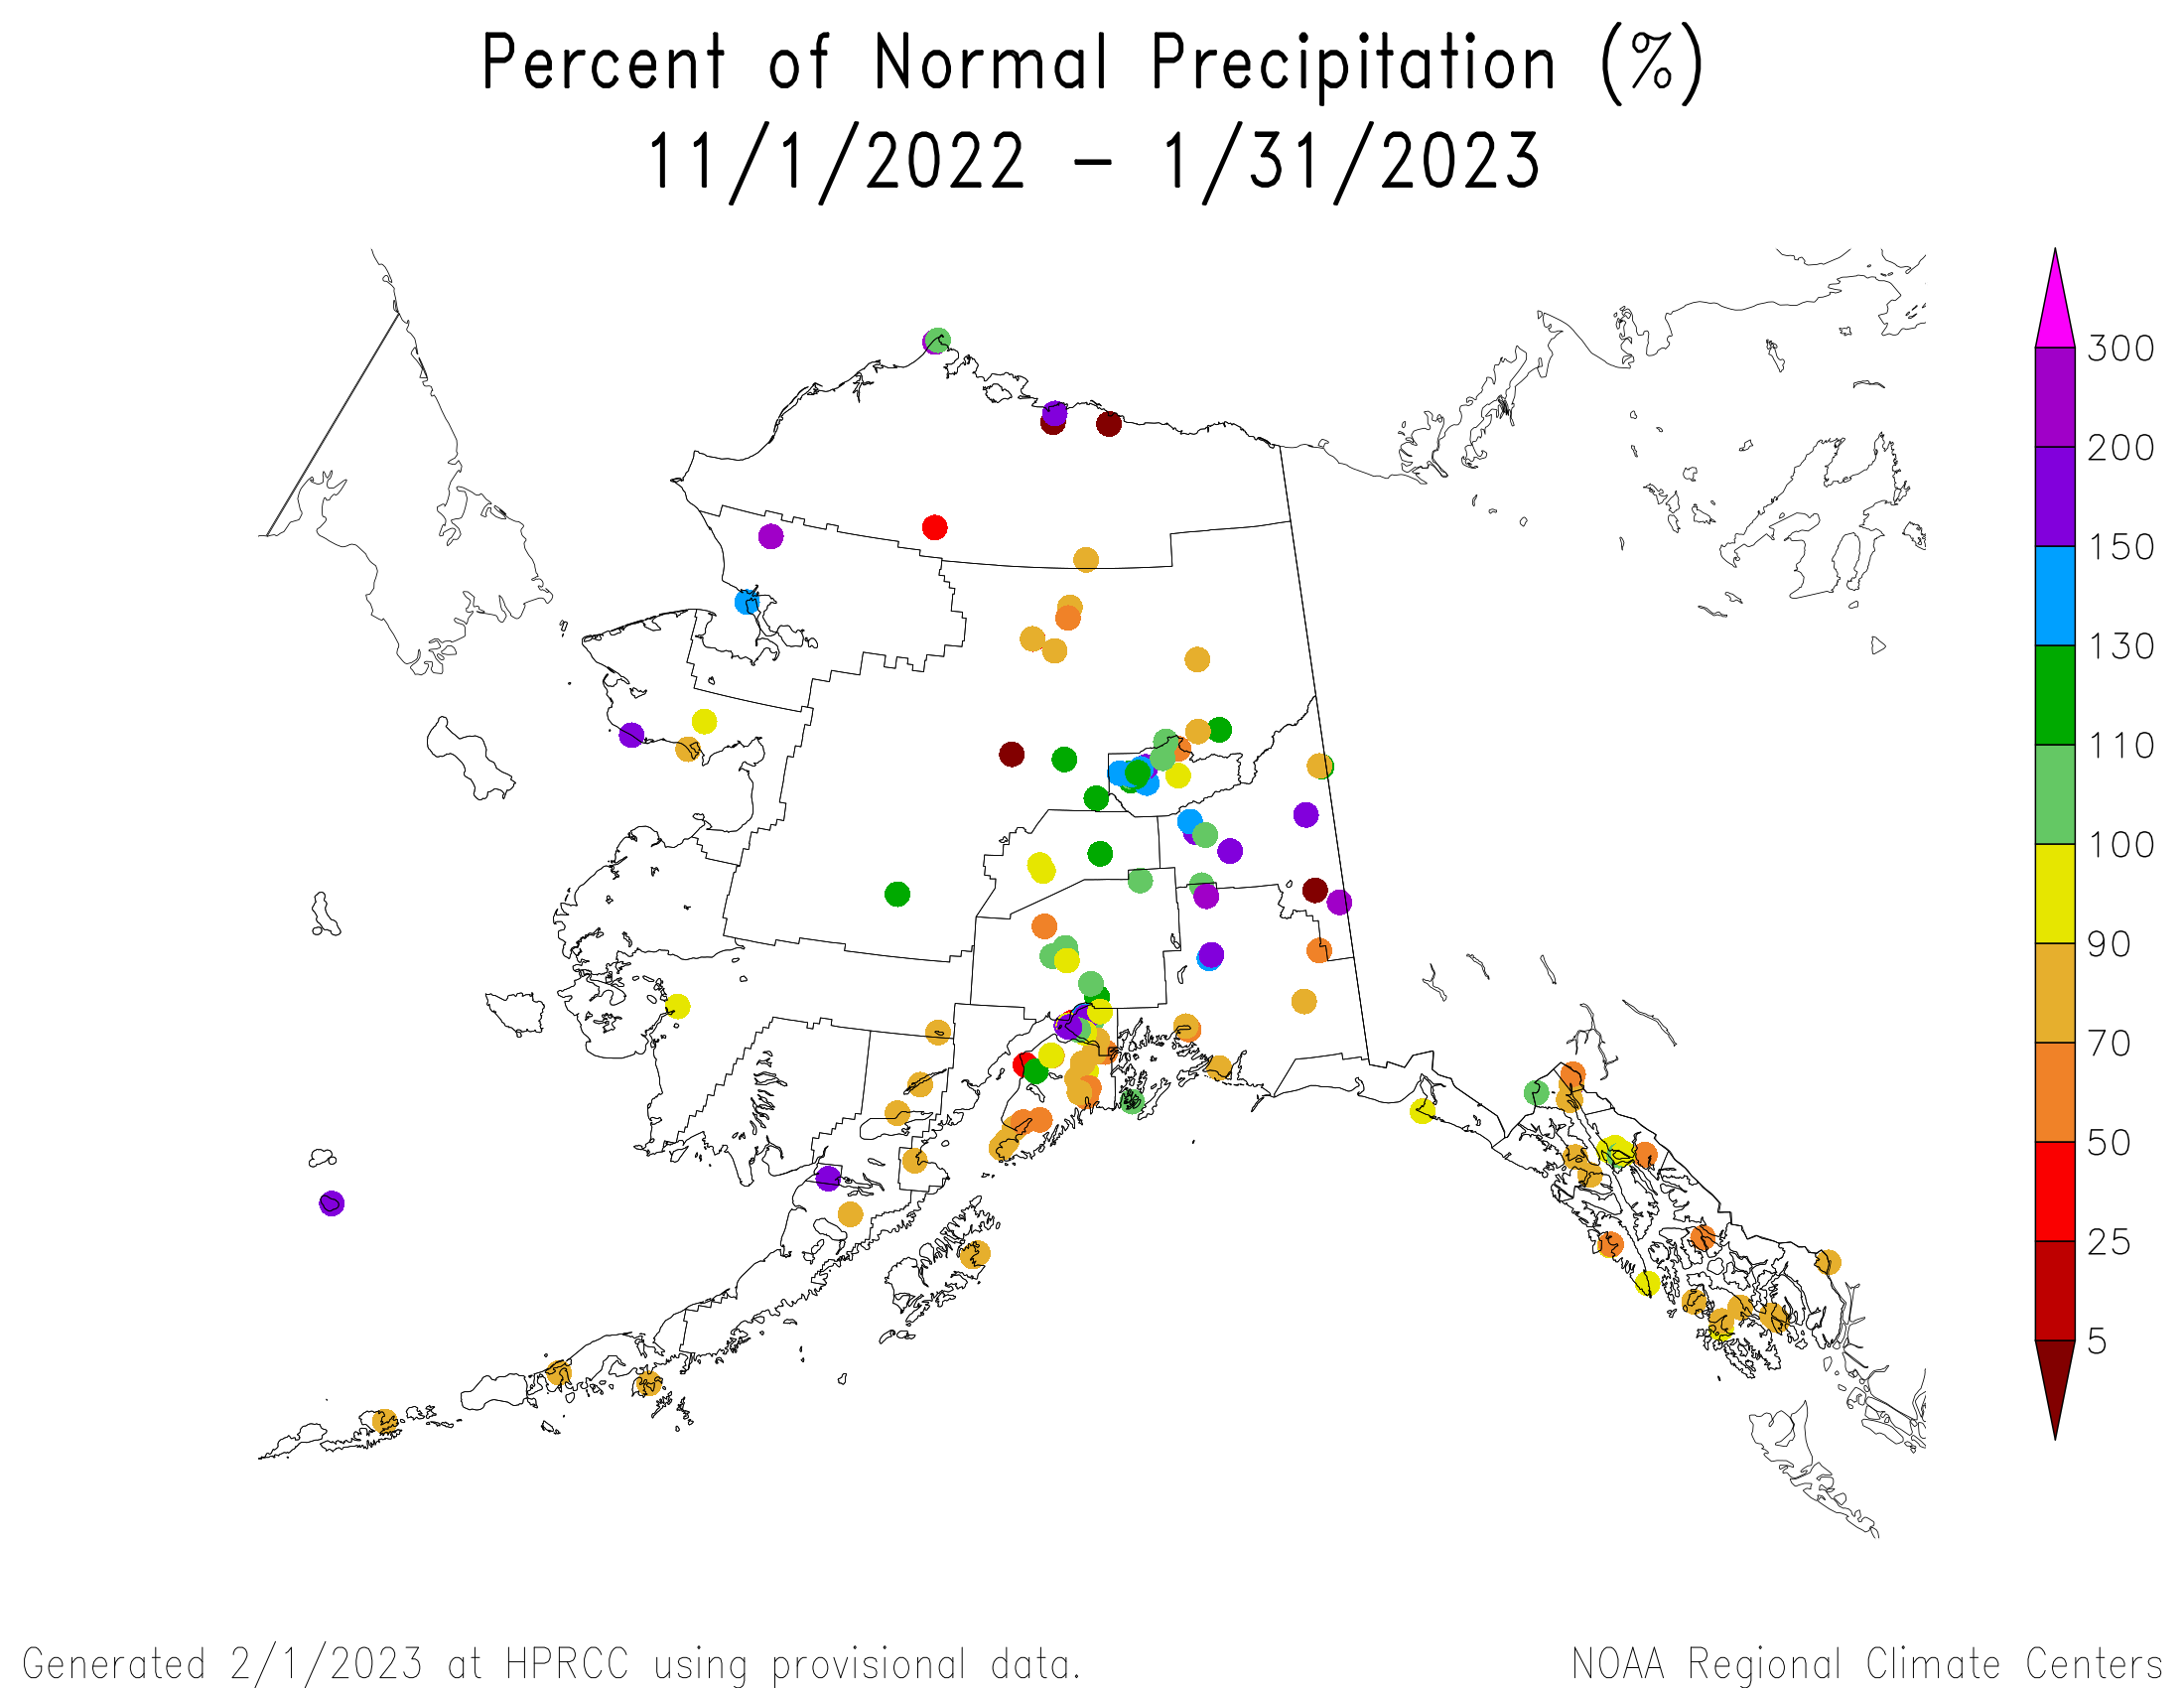 Alaska Percent of Normal Precipitation, November 2022-January 2023